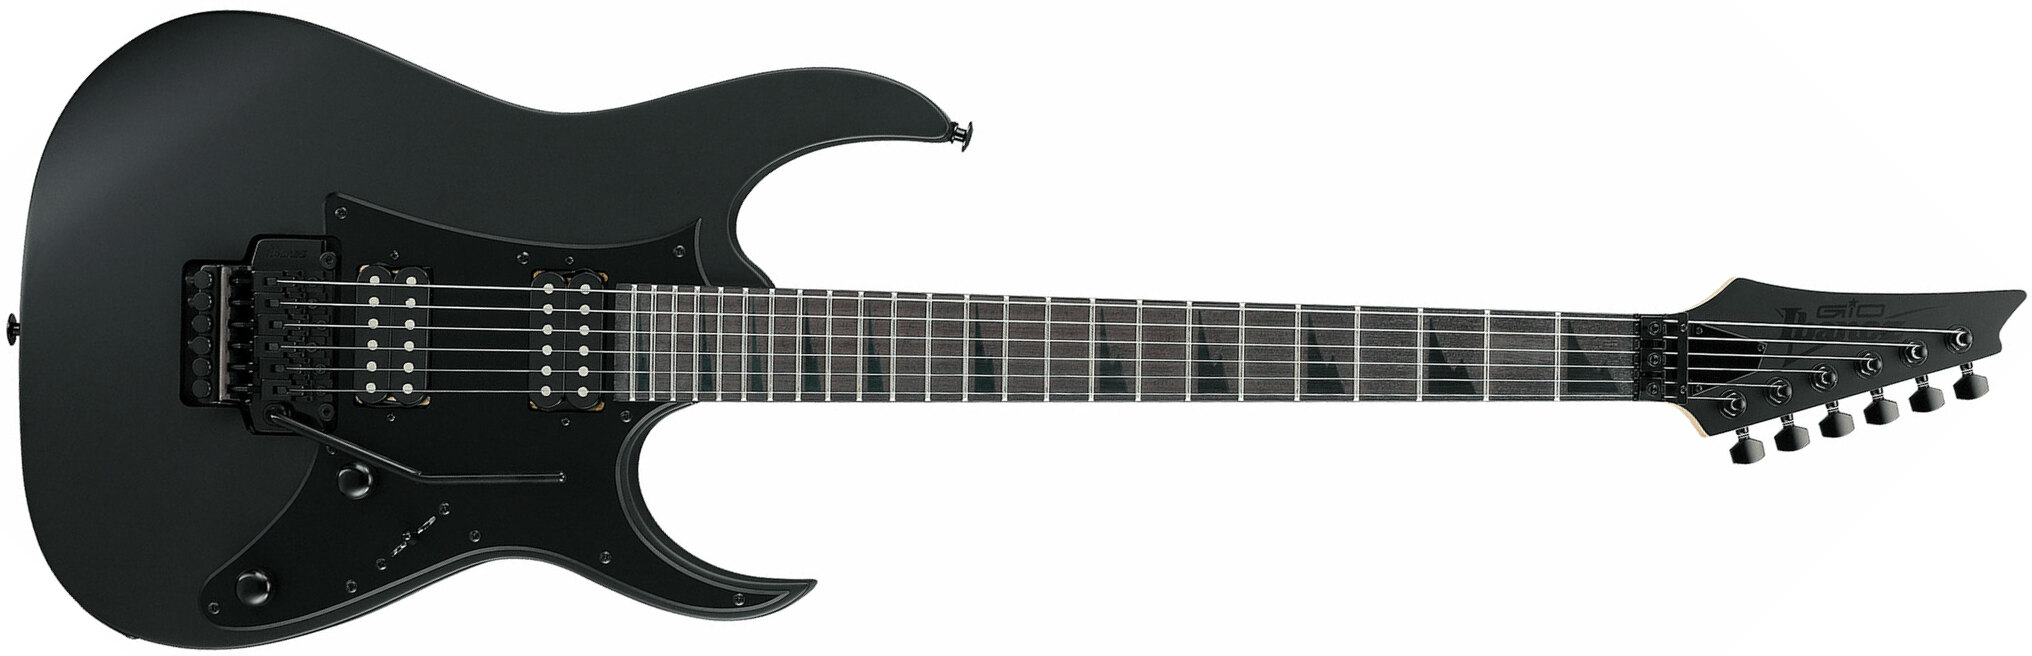 Ibanez Grgr330ex Bkf Gio 2h Fr Pur - Black Flat - Str shape electric guitar - Main picture